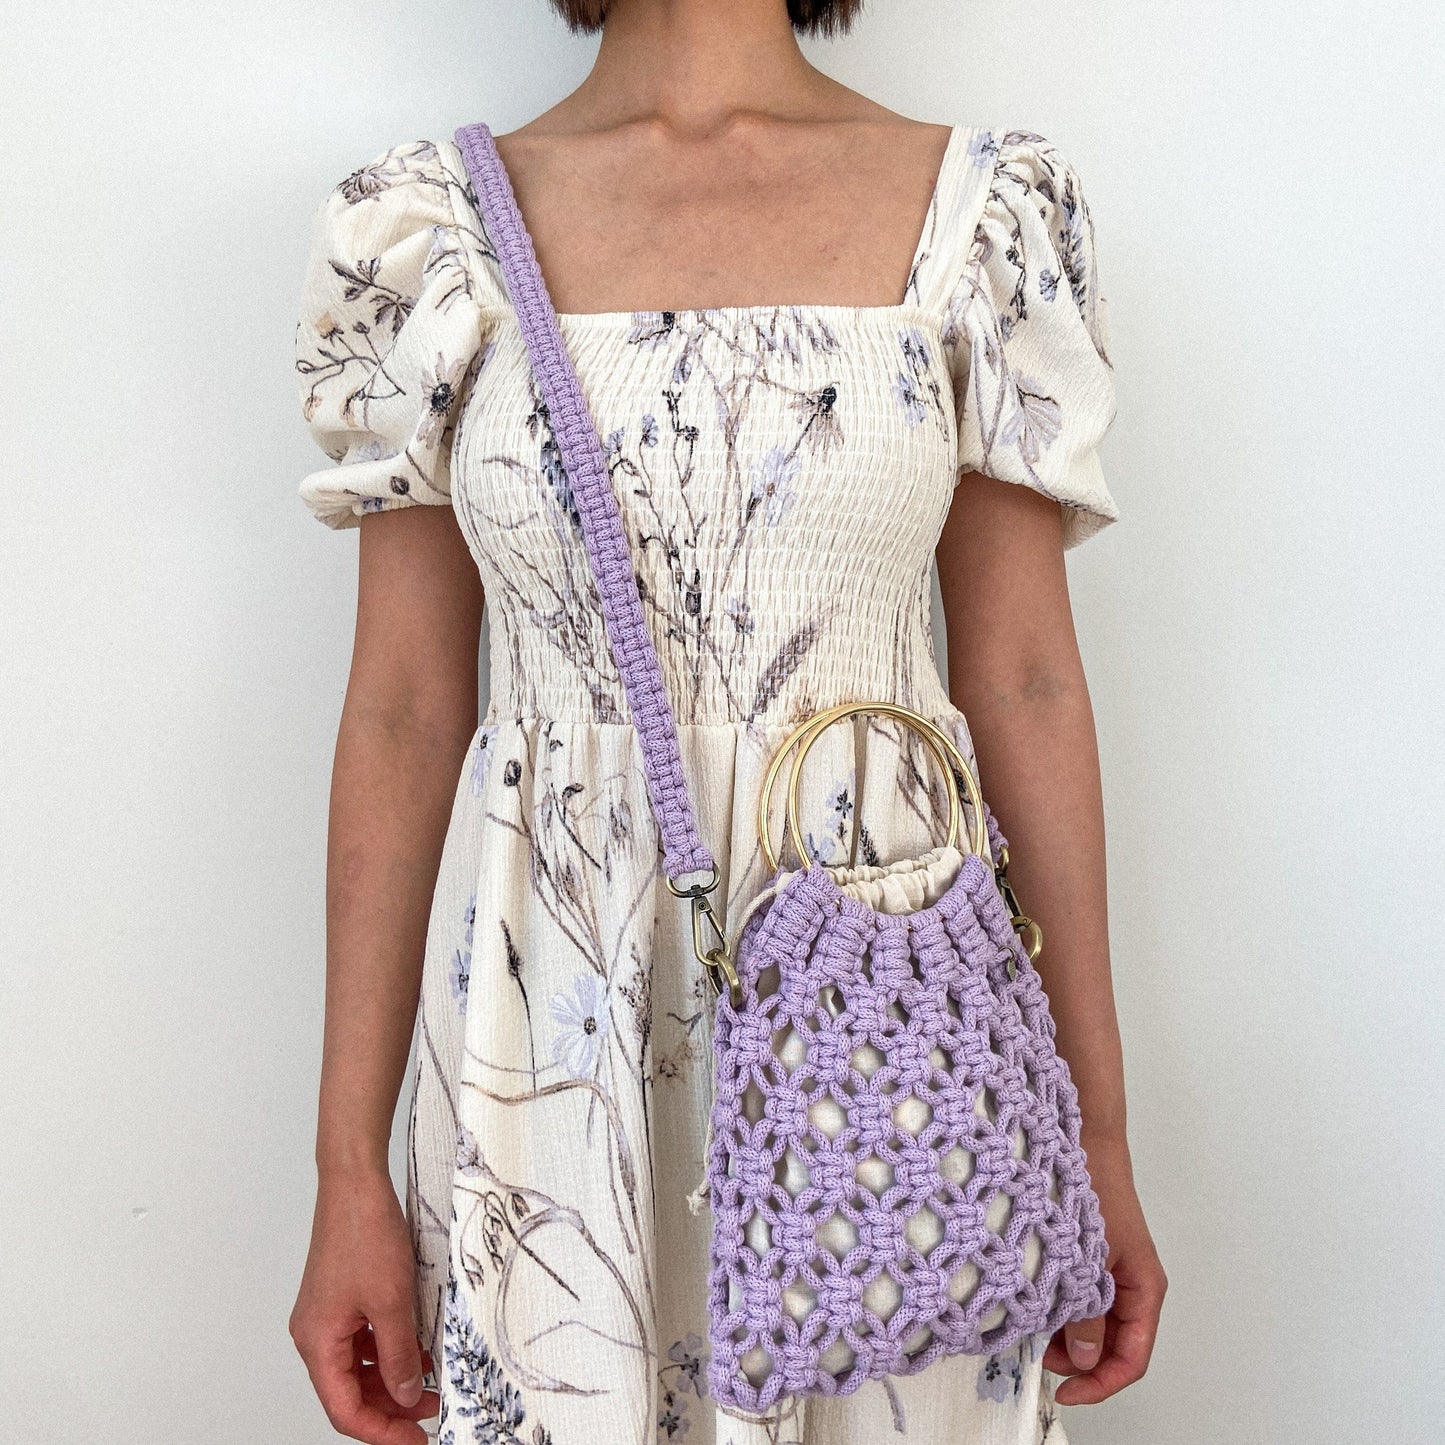 Flora Street Atelier Handmade Macrame Bag "Marina" Macrame net bag with golden ring handles